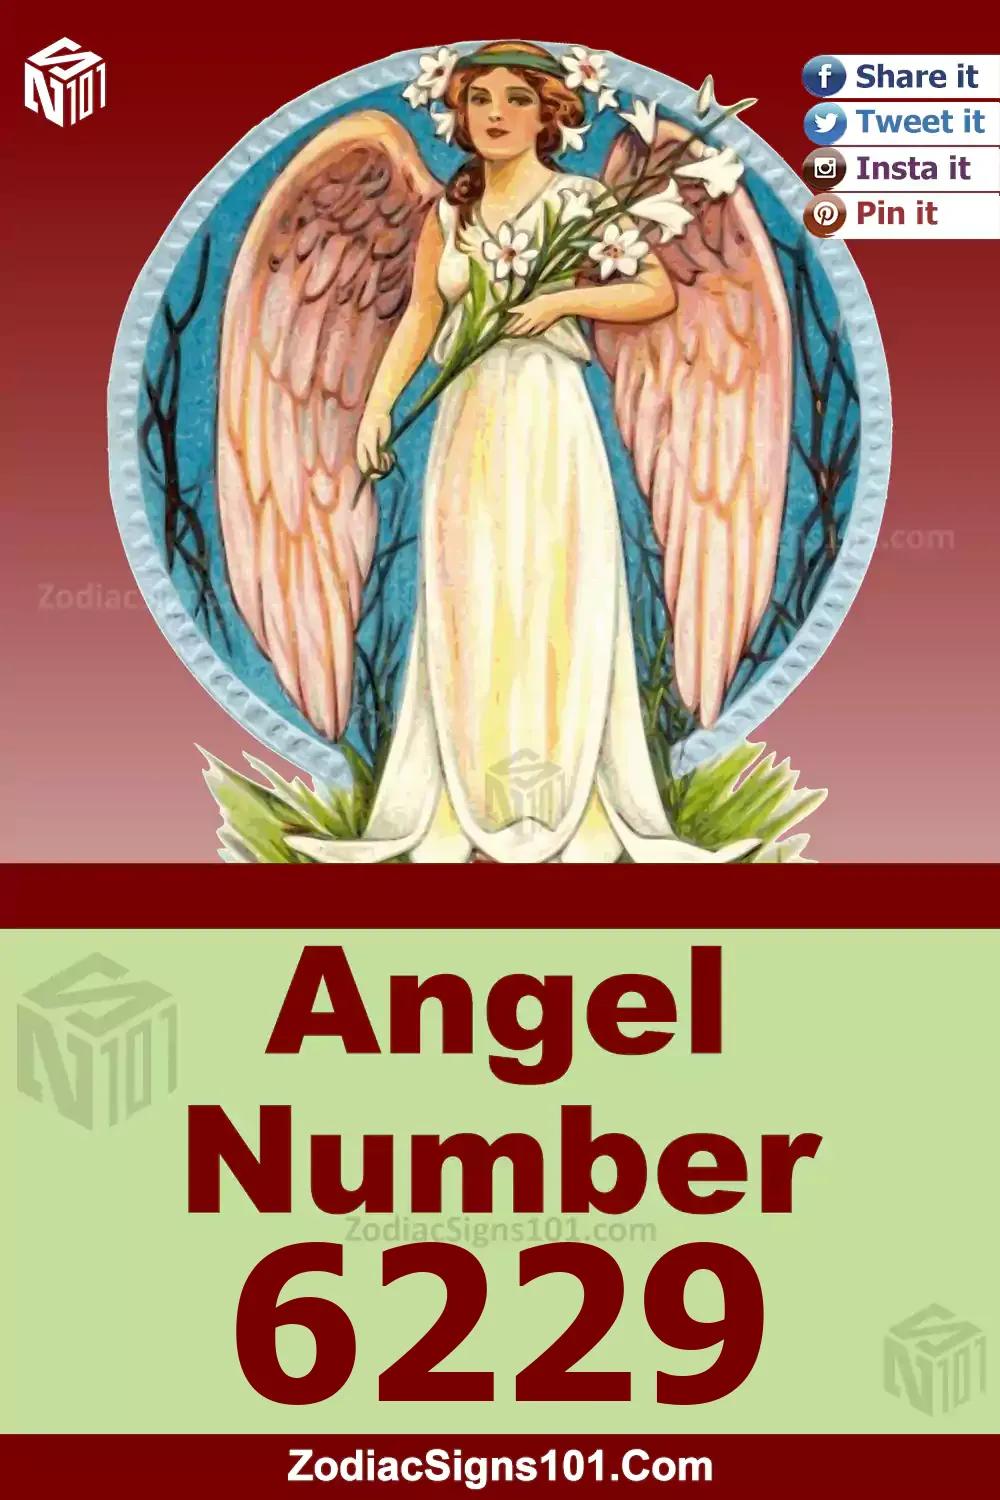 6229-Angel-Number-Meaning.jpg